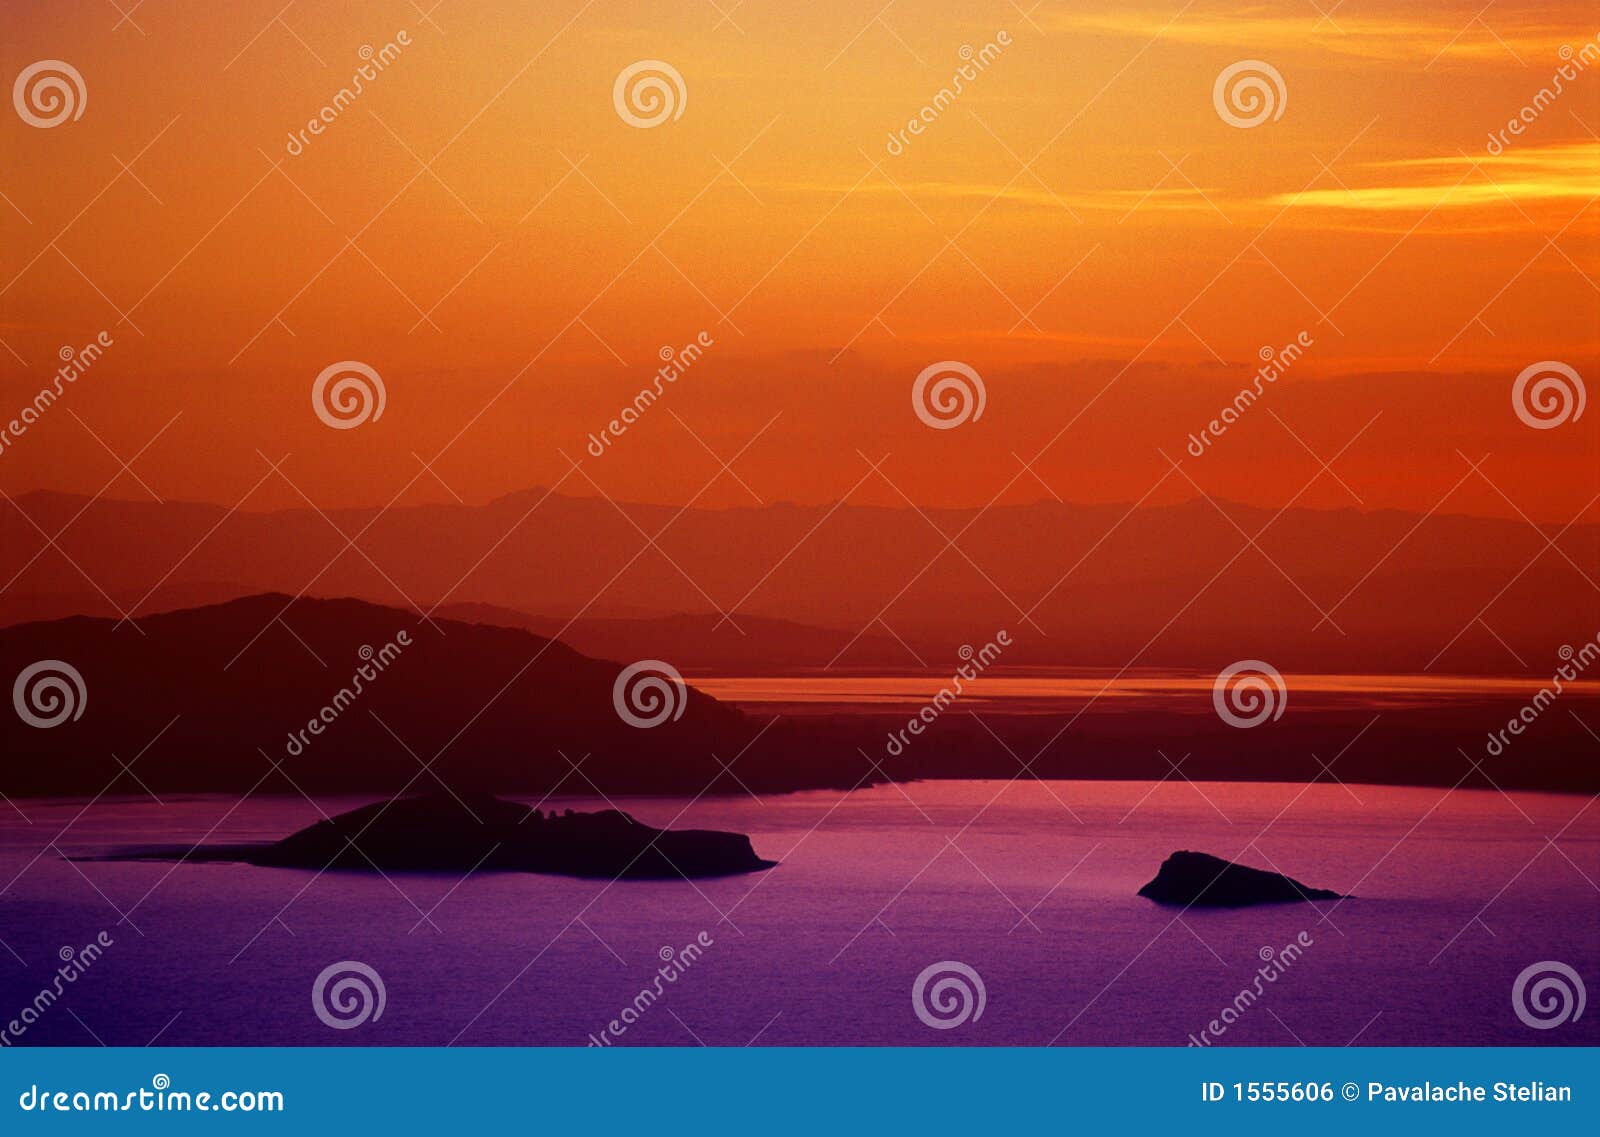 puno sunset over lake titicaca